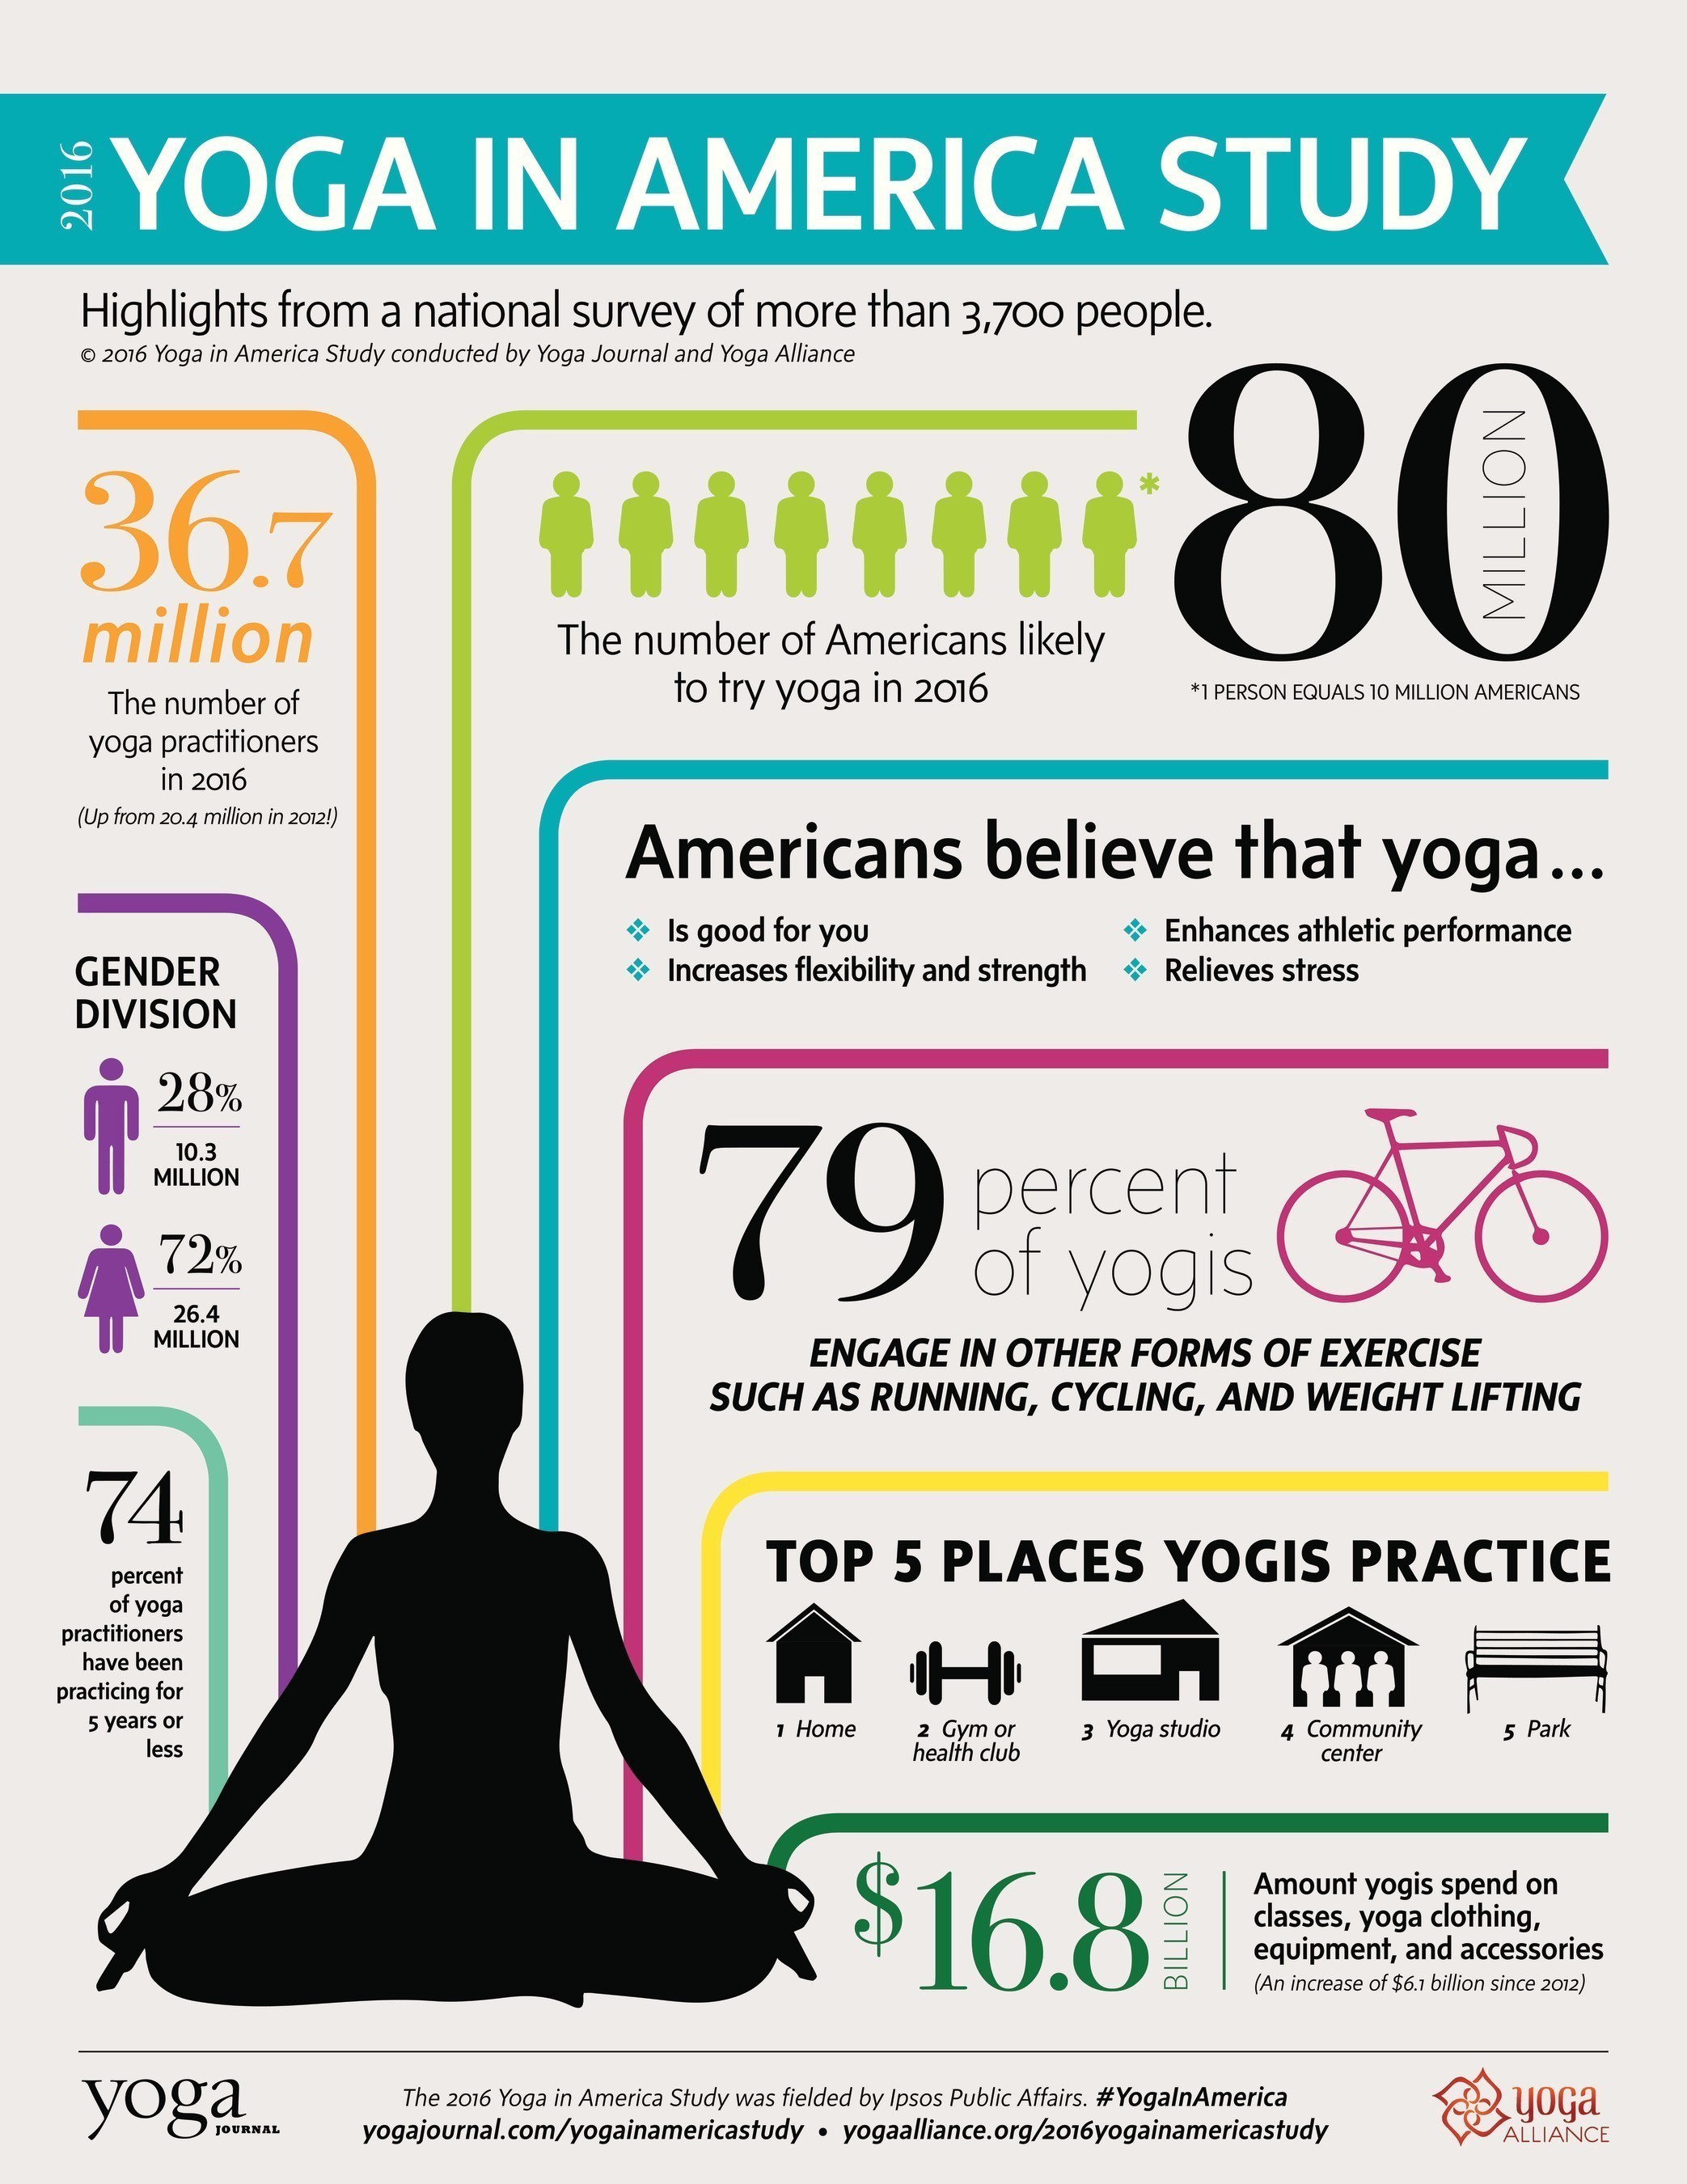 Yoga Alliance - 2016 Yoga in America Study Infographic